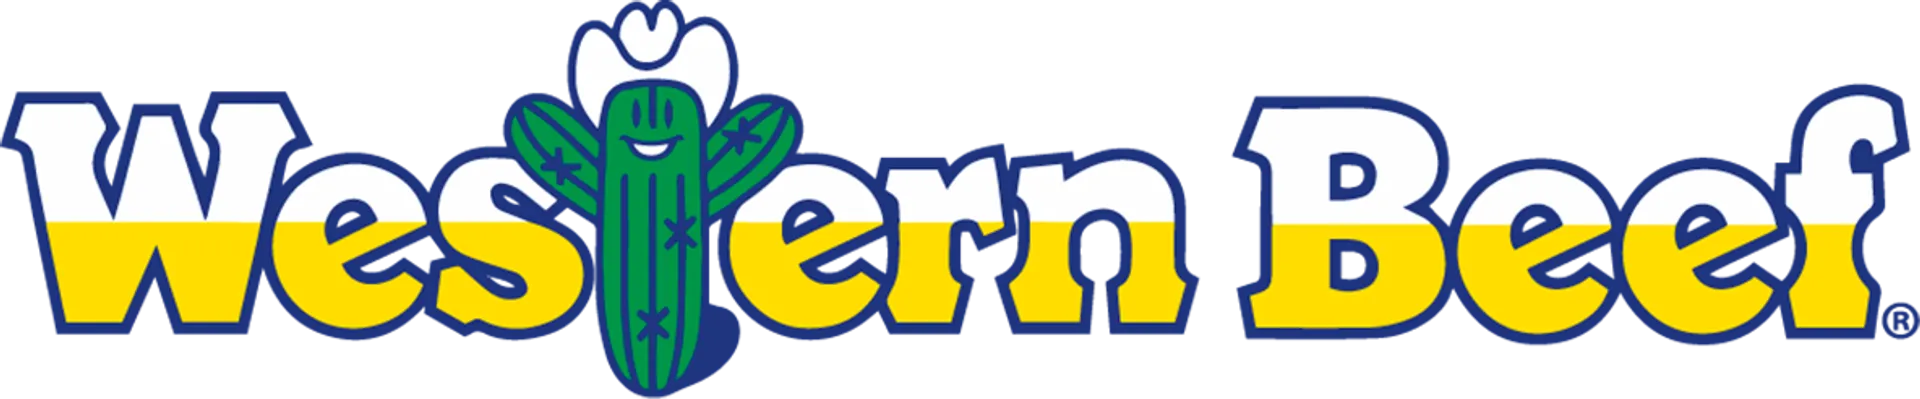 WESTERN BEEF SUPERMARKET logo de catálogo